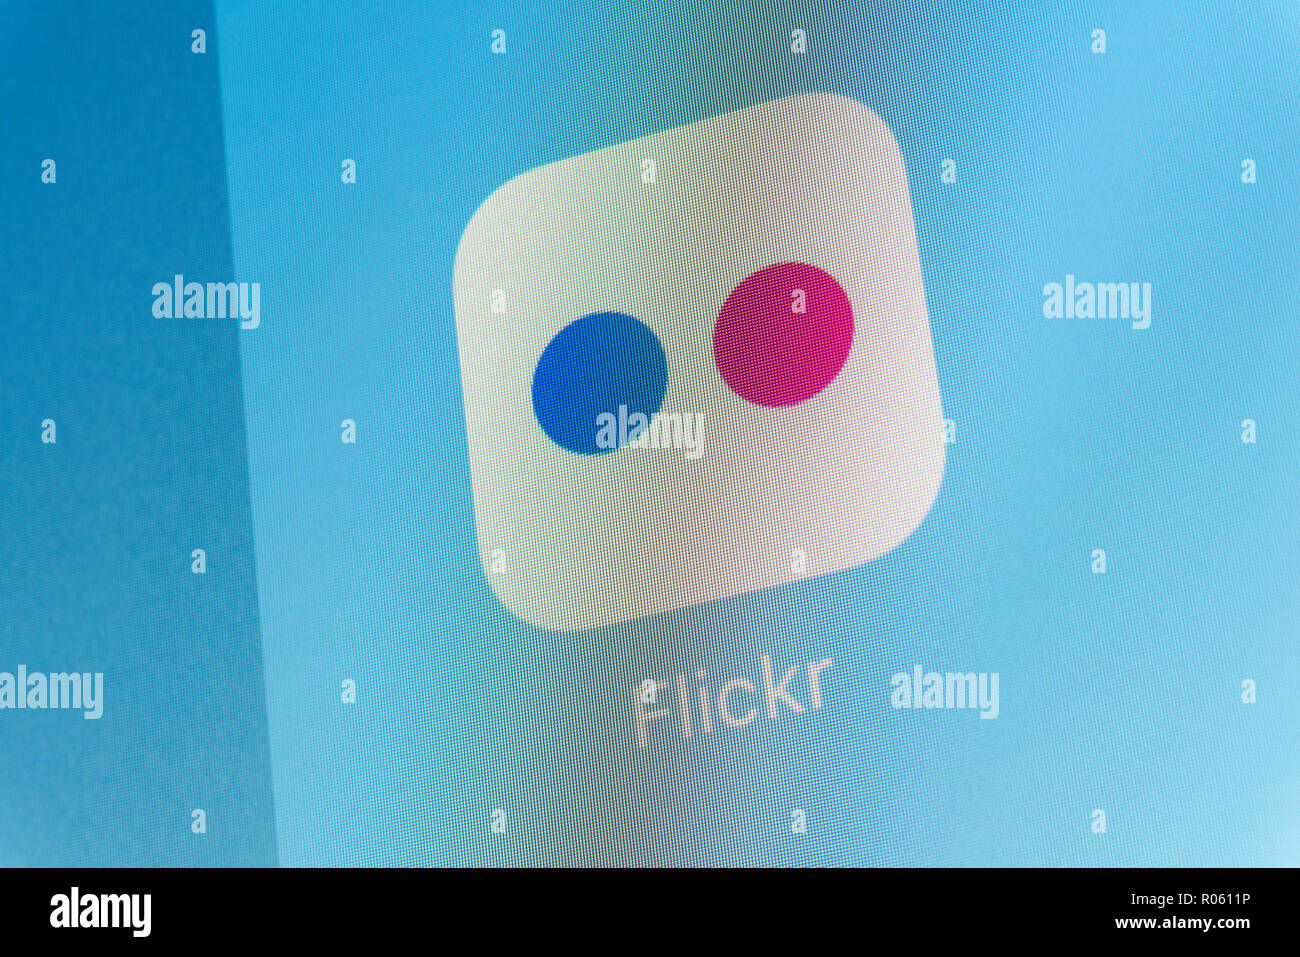 Flickr App on cellphone screen Stock Photo